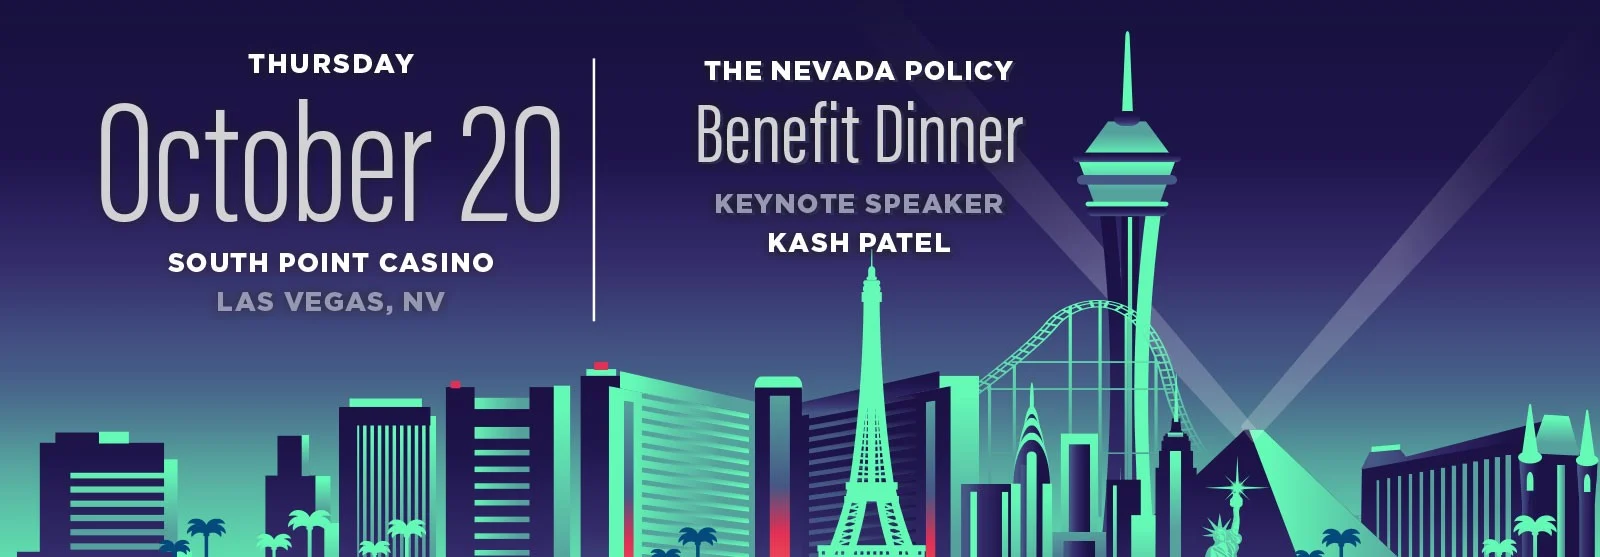 Nevada Policy’s Las Vegas Benefit Dinner